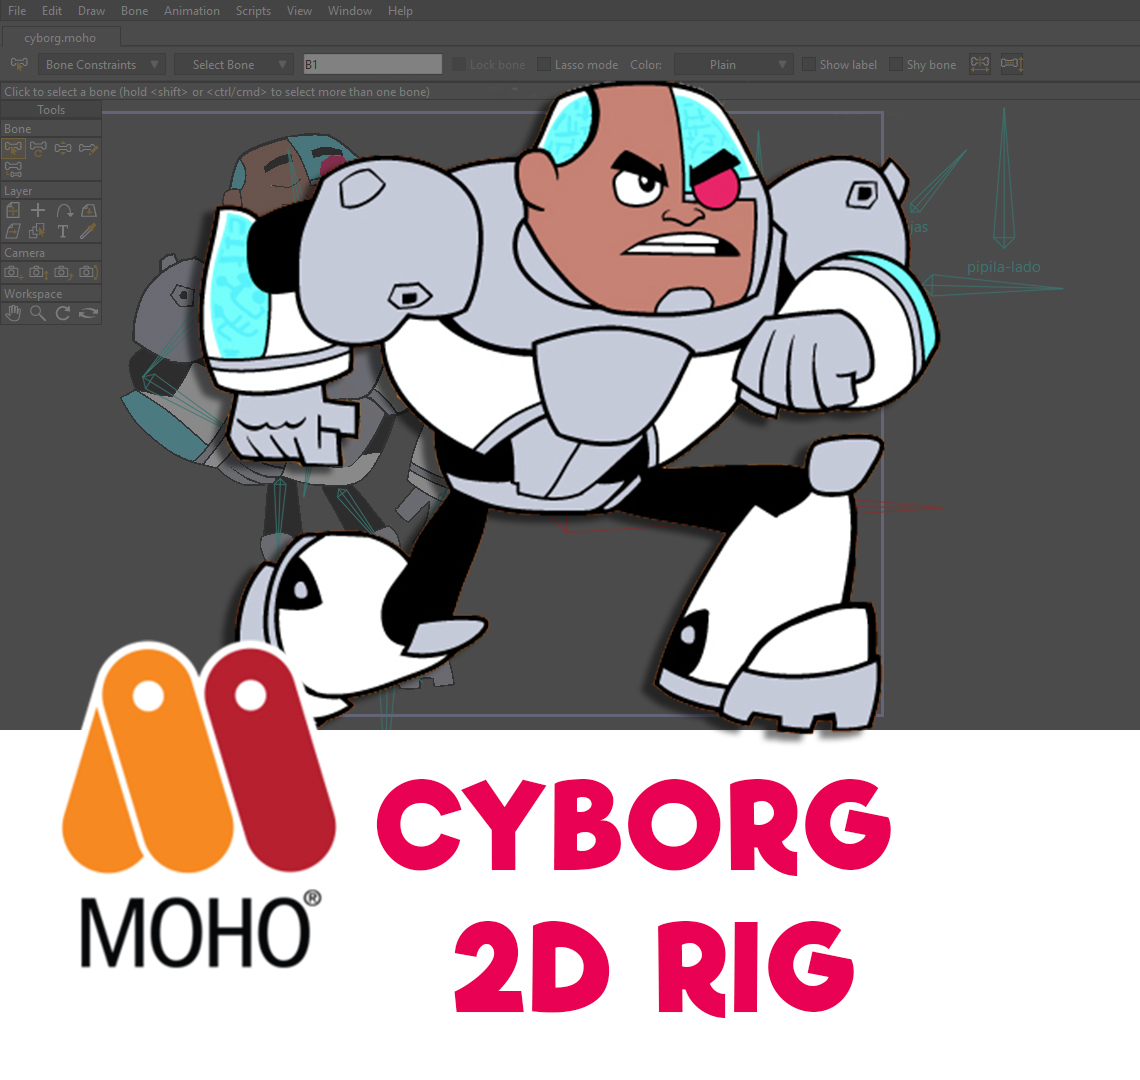 Cyborg 2D Rig – CARTOON NETWOK character